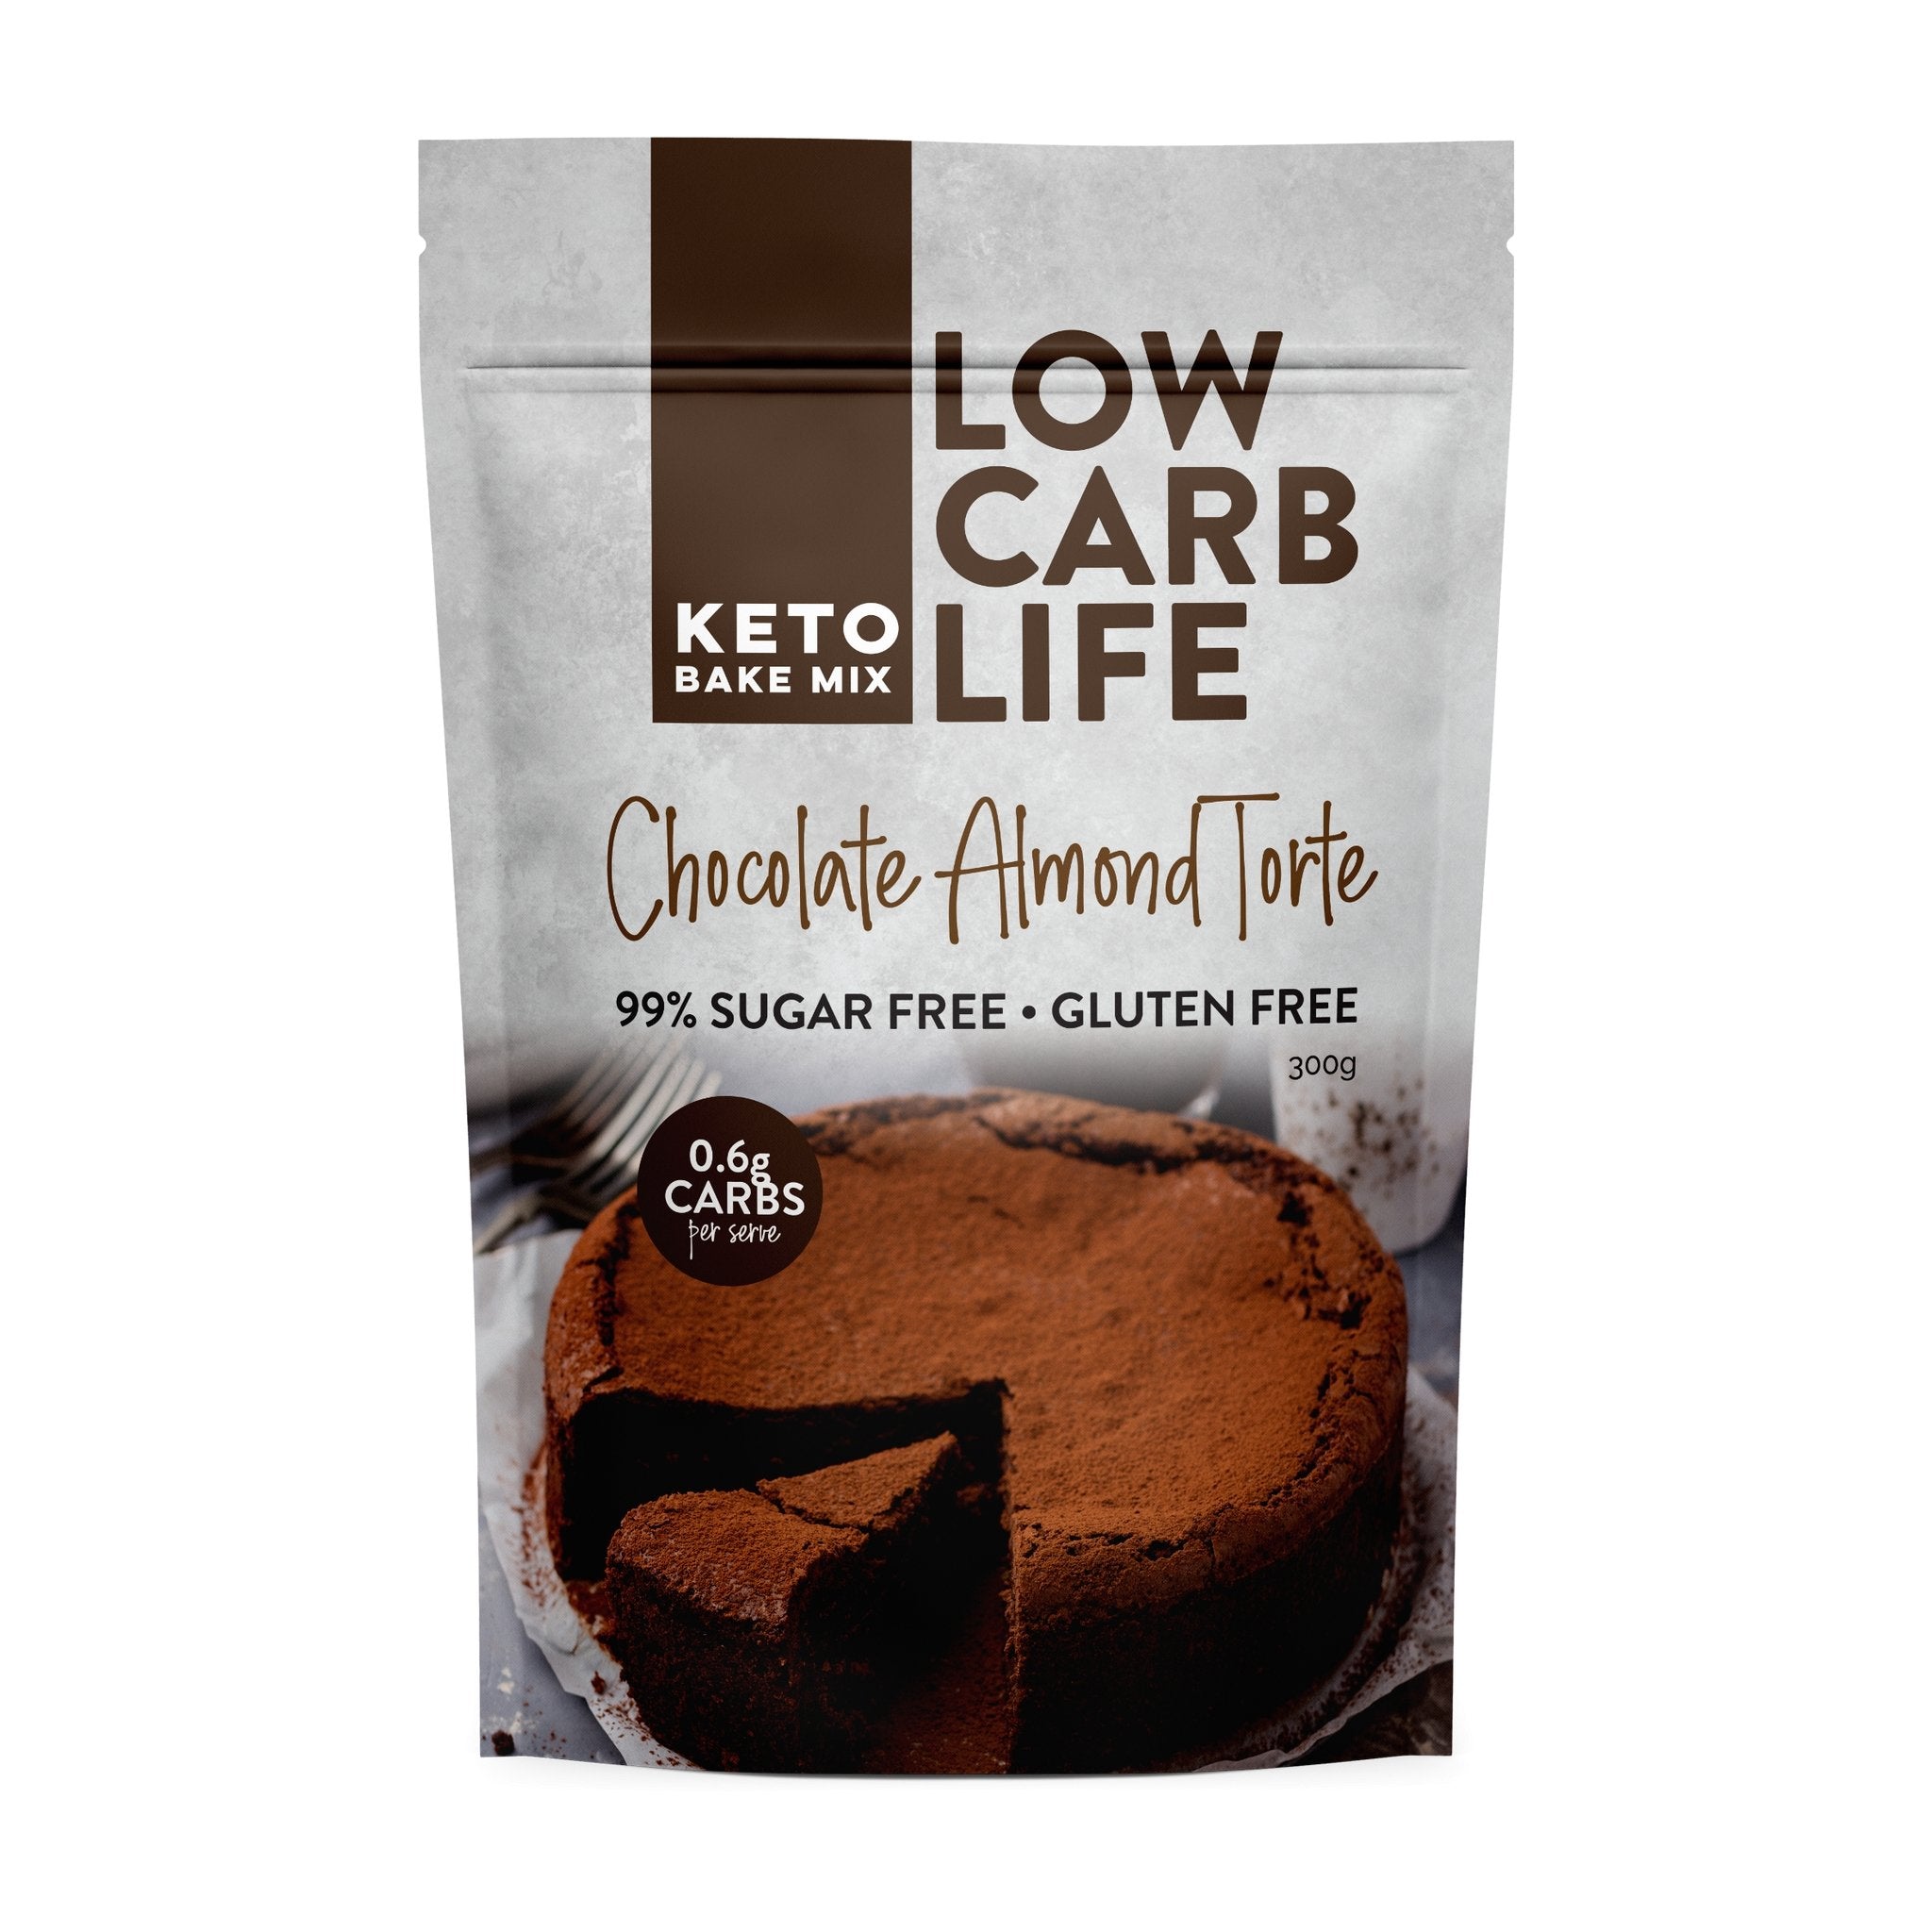 Buy Low Carb Life Chocolate Almond Torte Keto Mix @ Yo Keto Australia